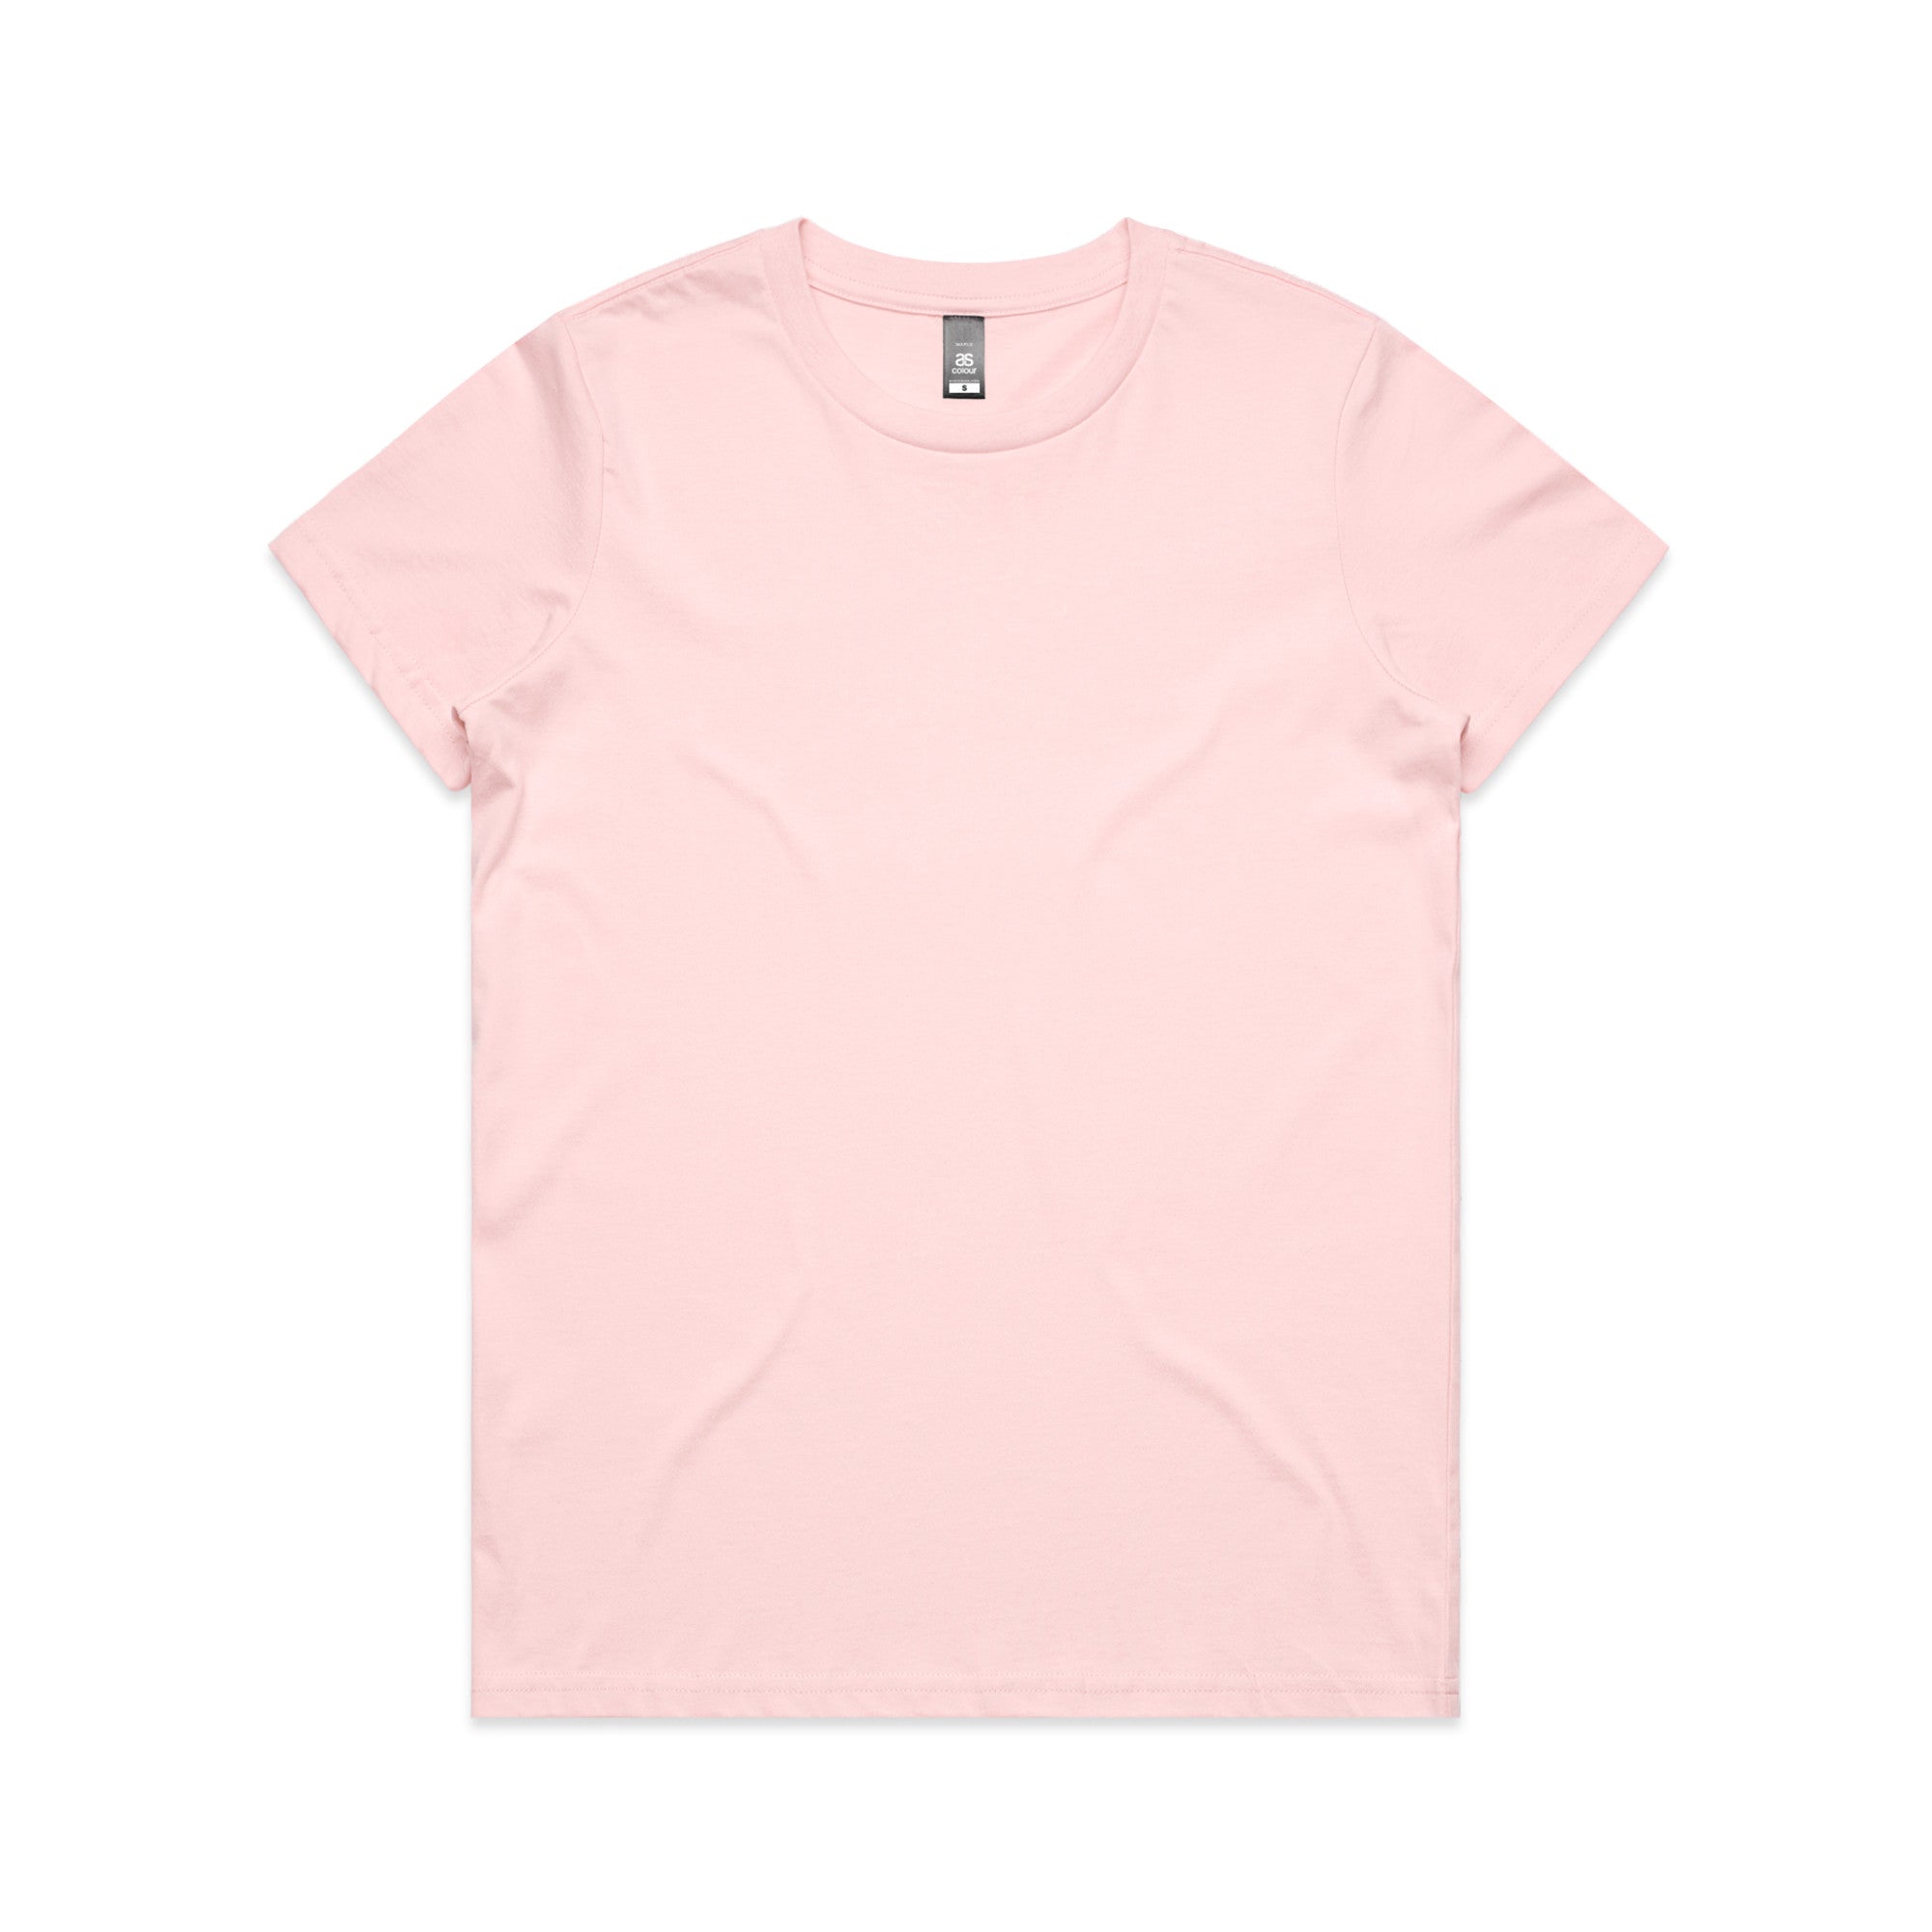 4001 Maple Tee, T-Shirts, Women